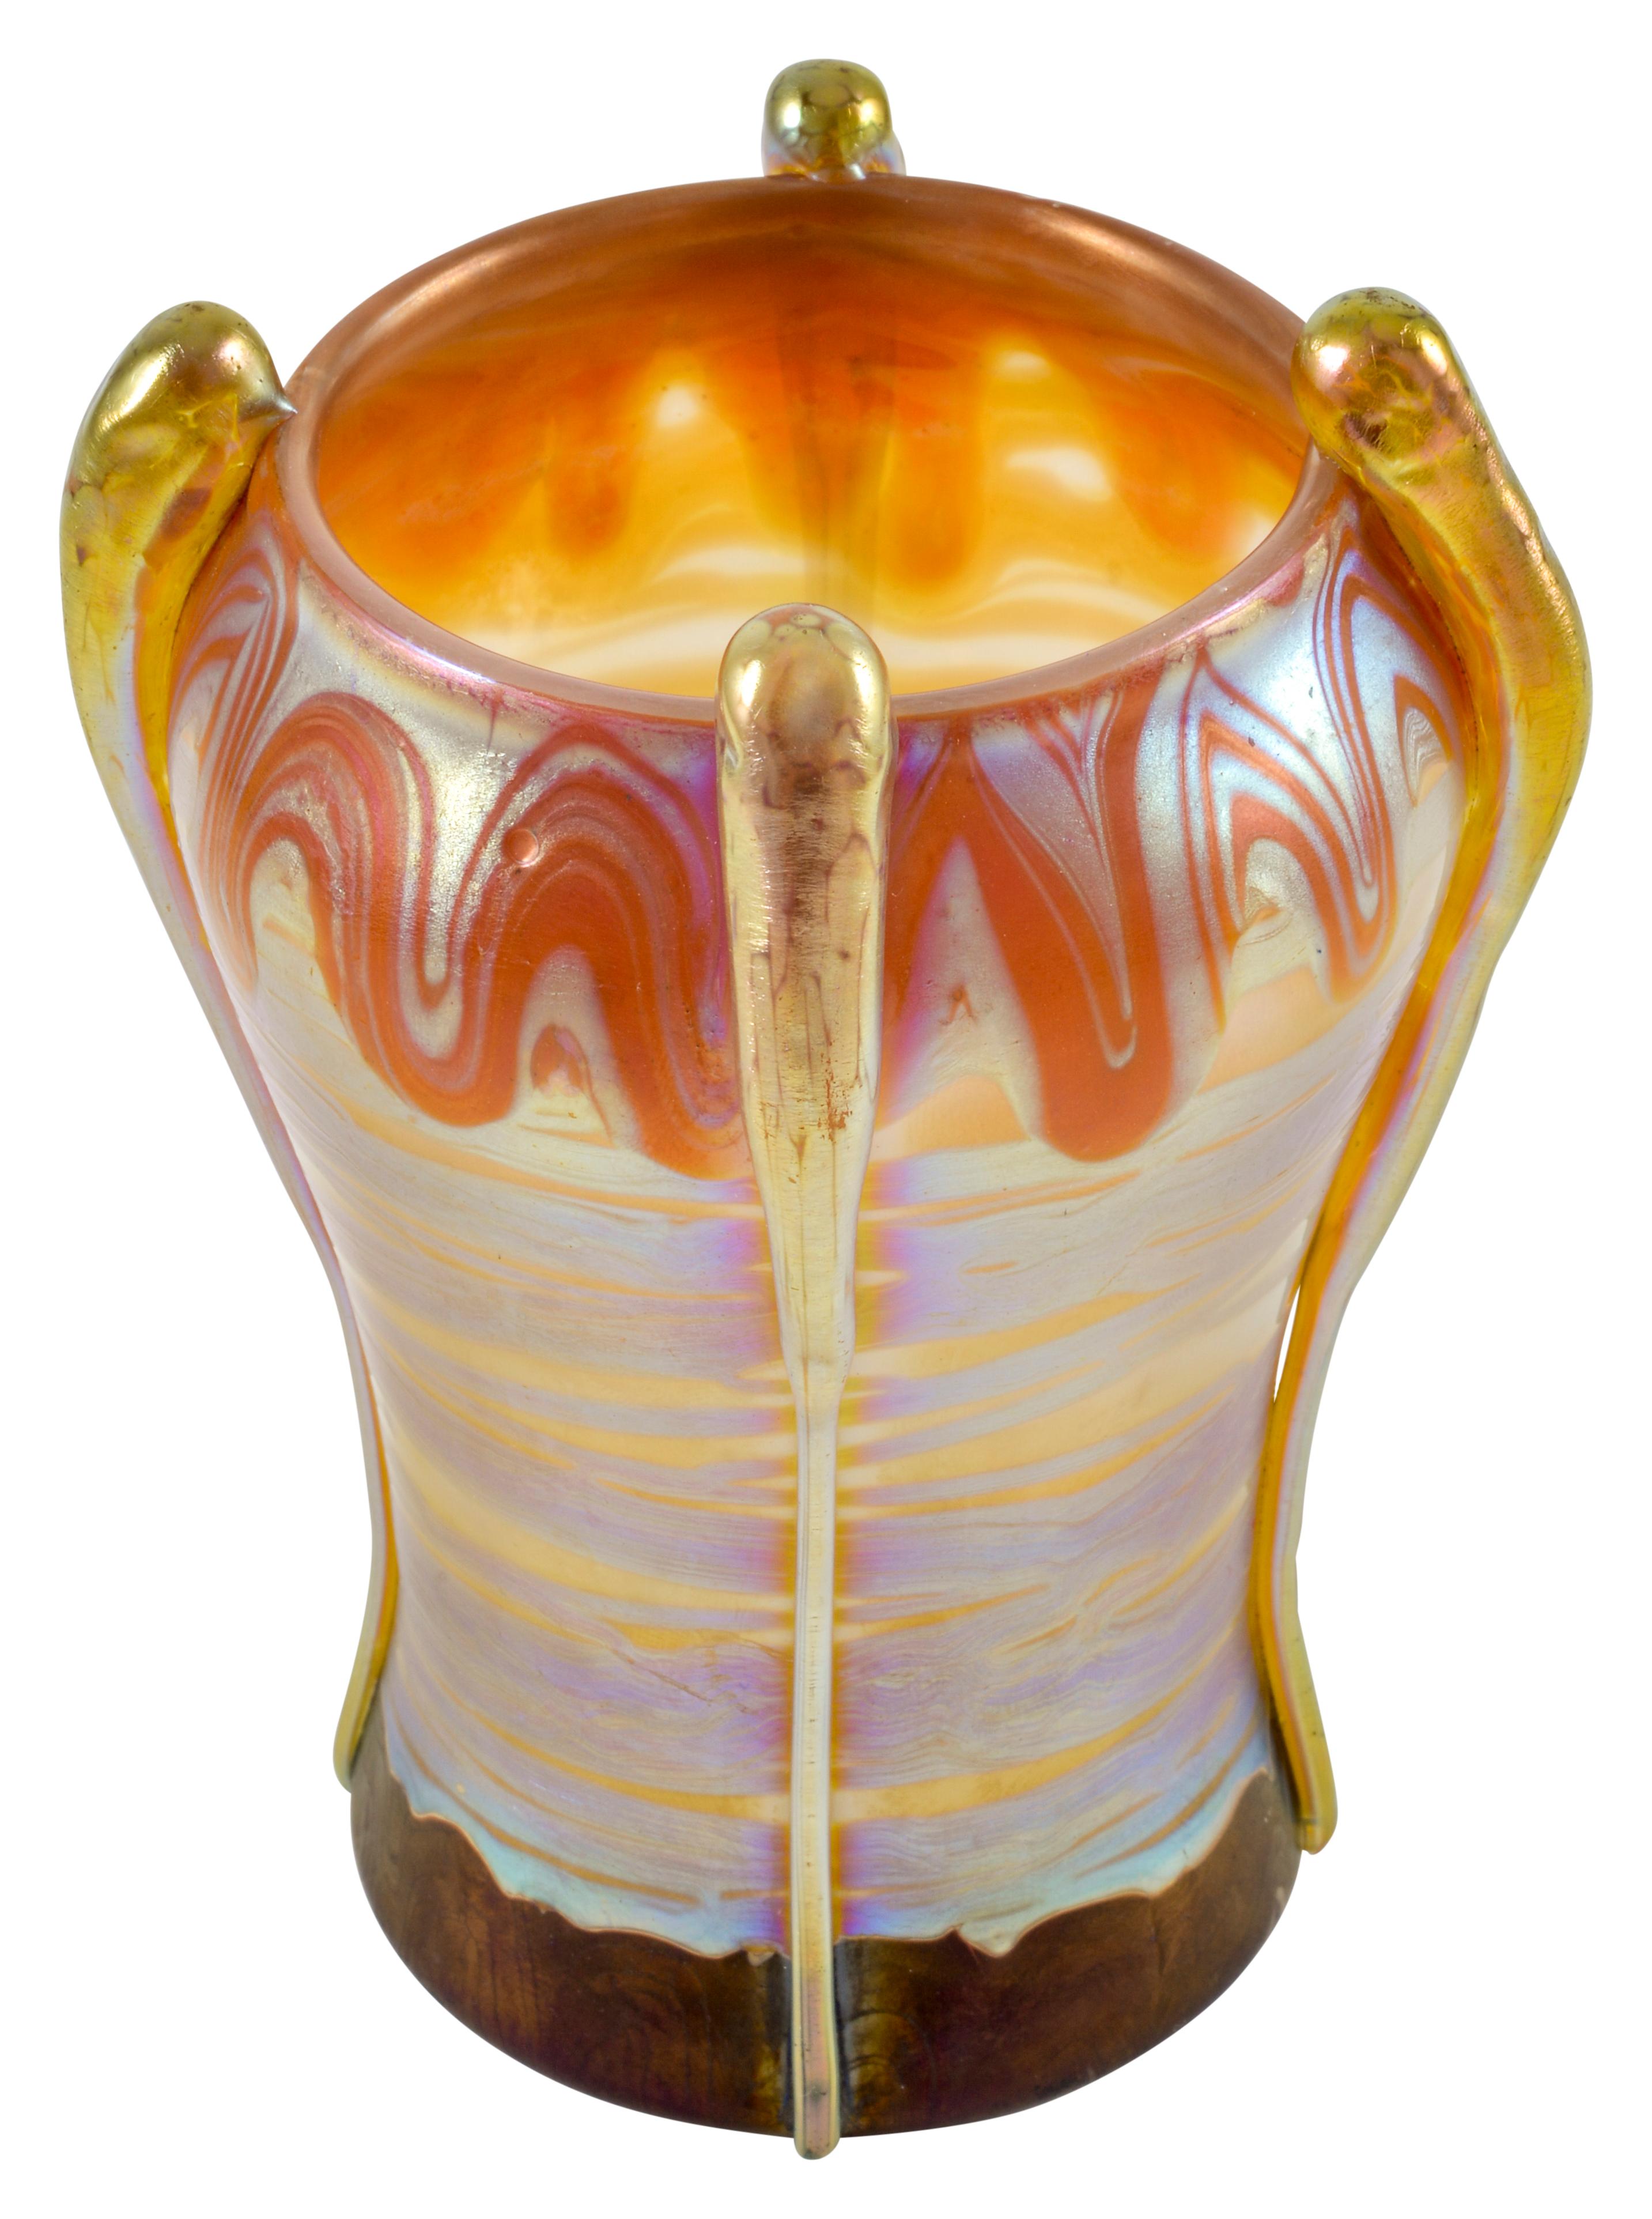 Austrian Jugendstil Loetz Art Glass Vase Orange circa 1901 Koloman Moser School In Good Condition For Sale In Vienna, AT